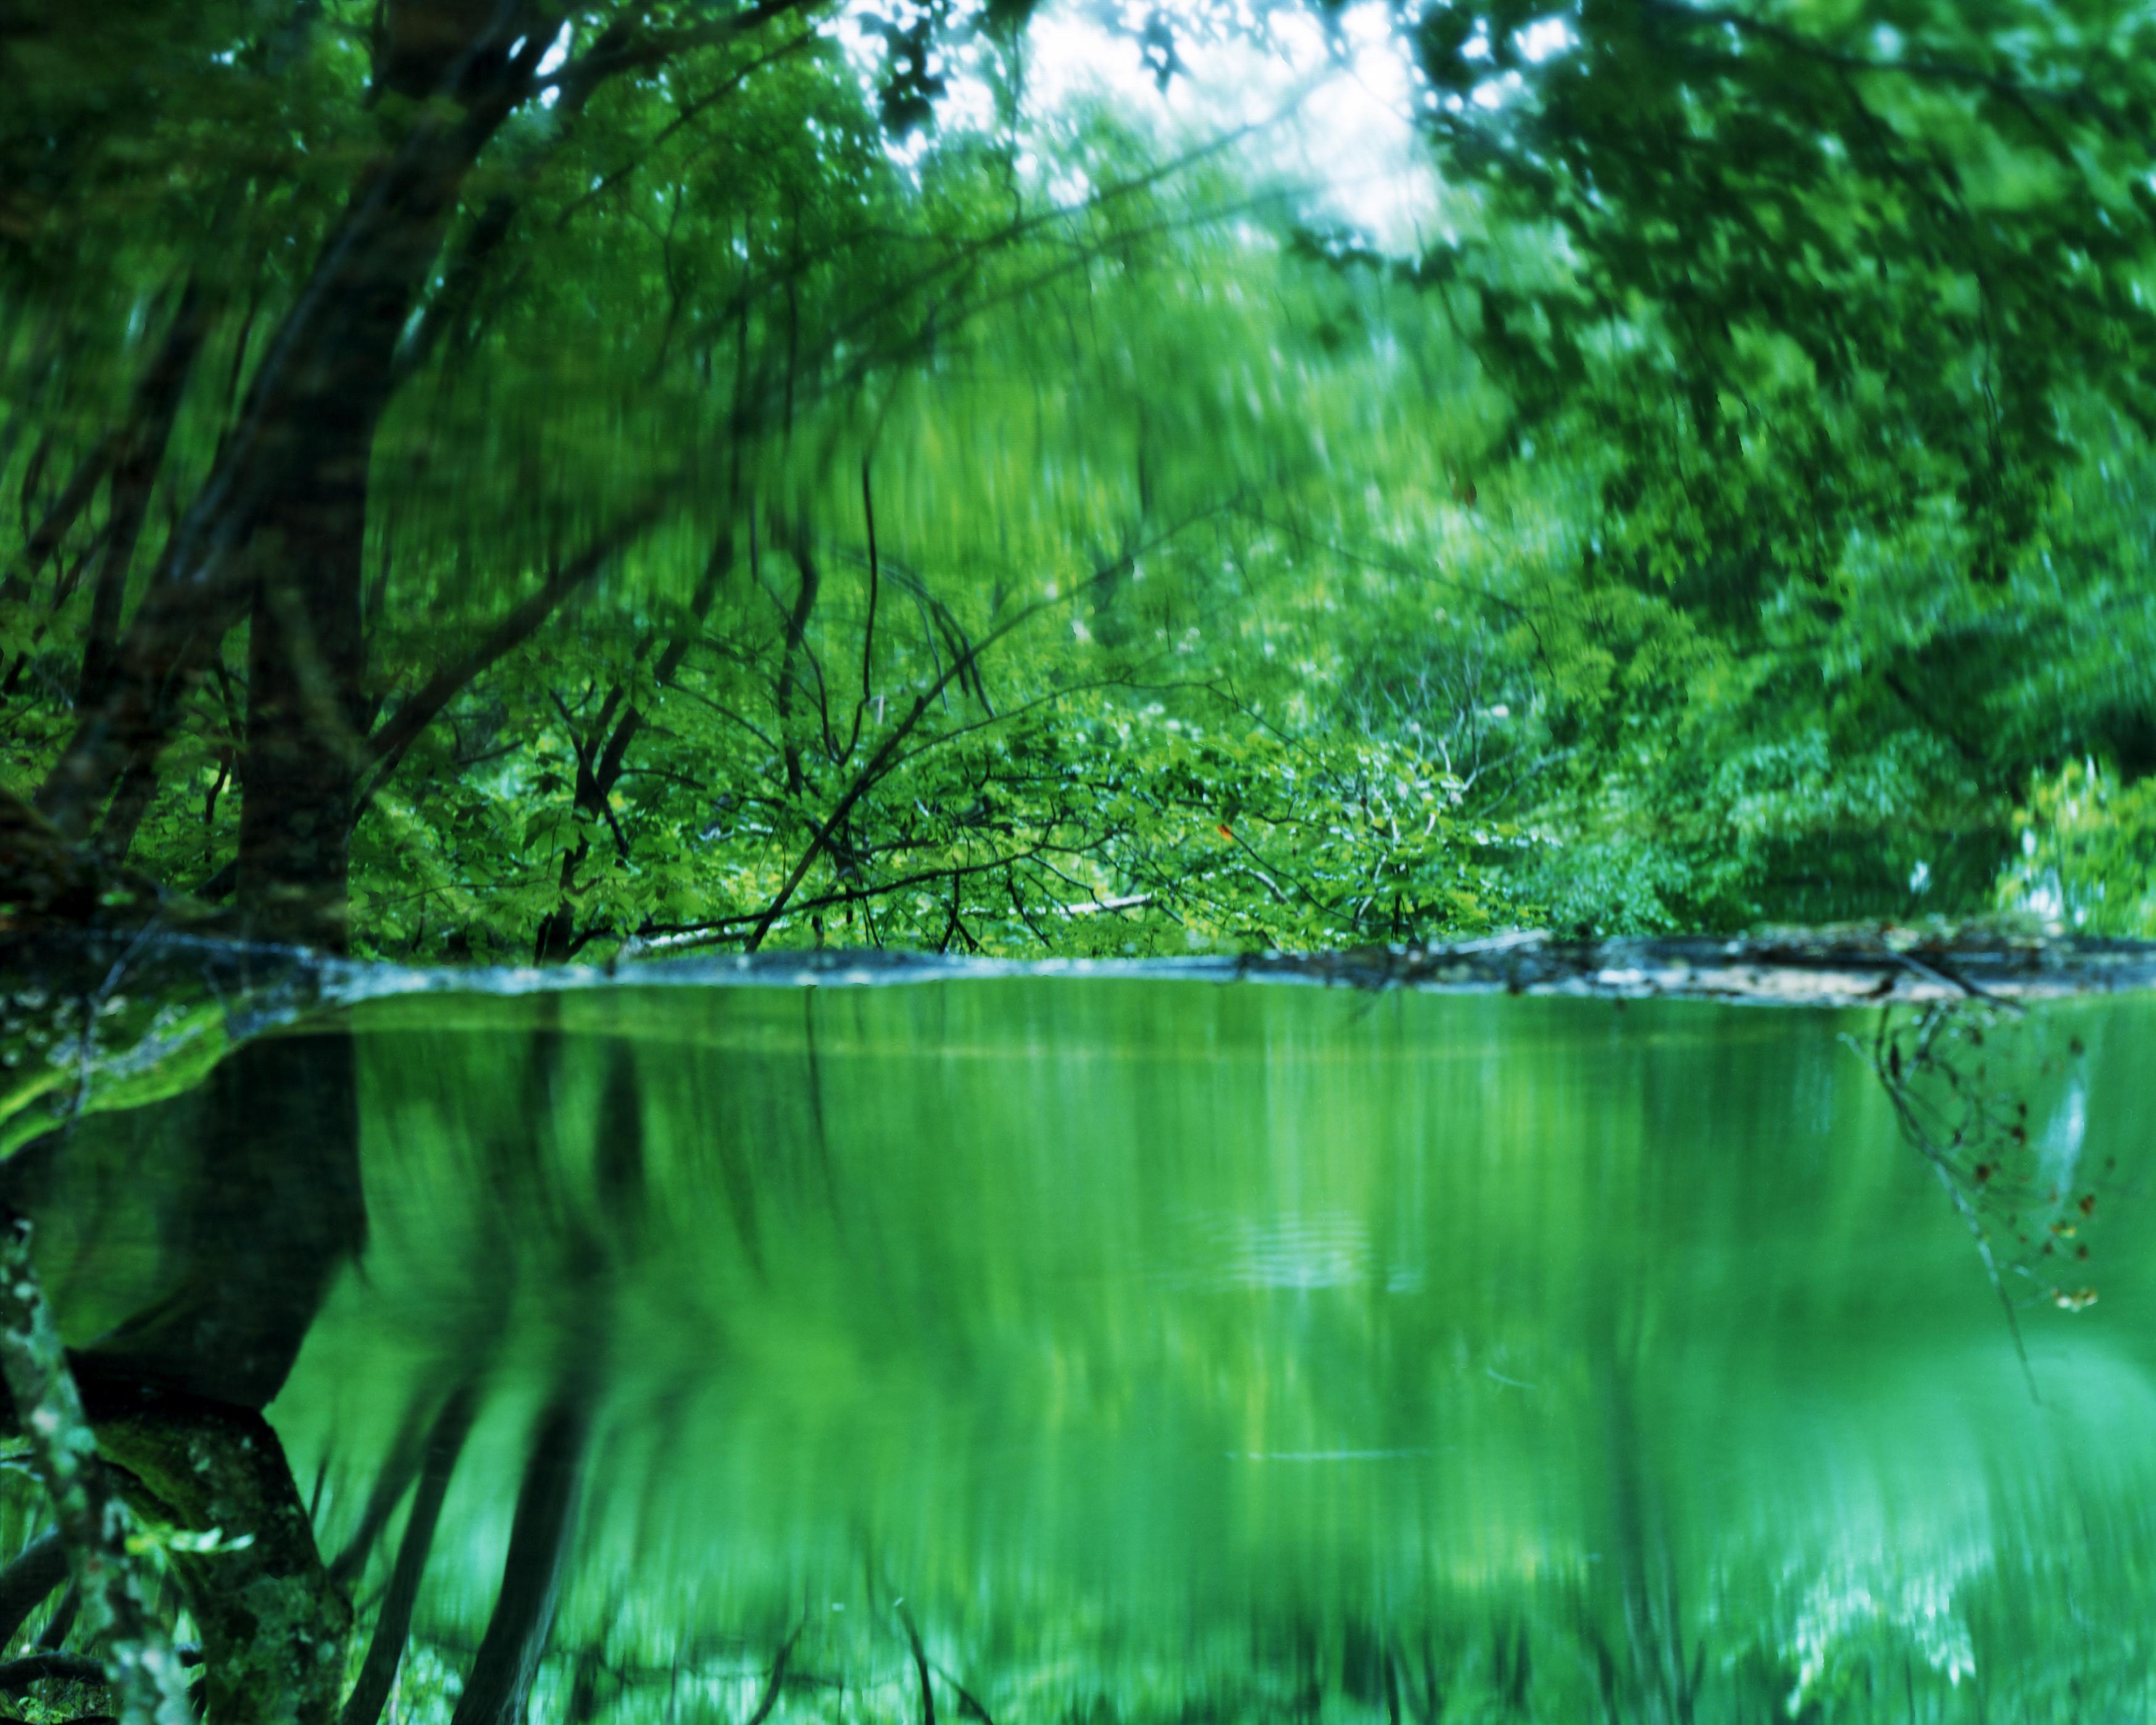 Water Mirror 17, WM-739 – Risaku Suzuki, Nature, Tree, Water, Mirror, Reflection